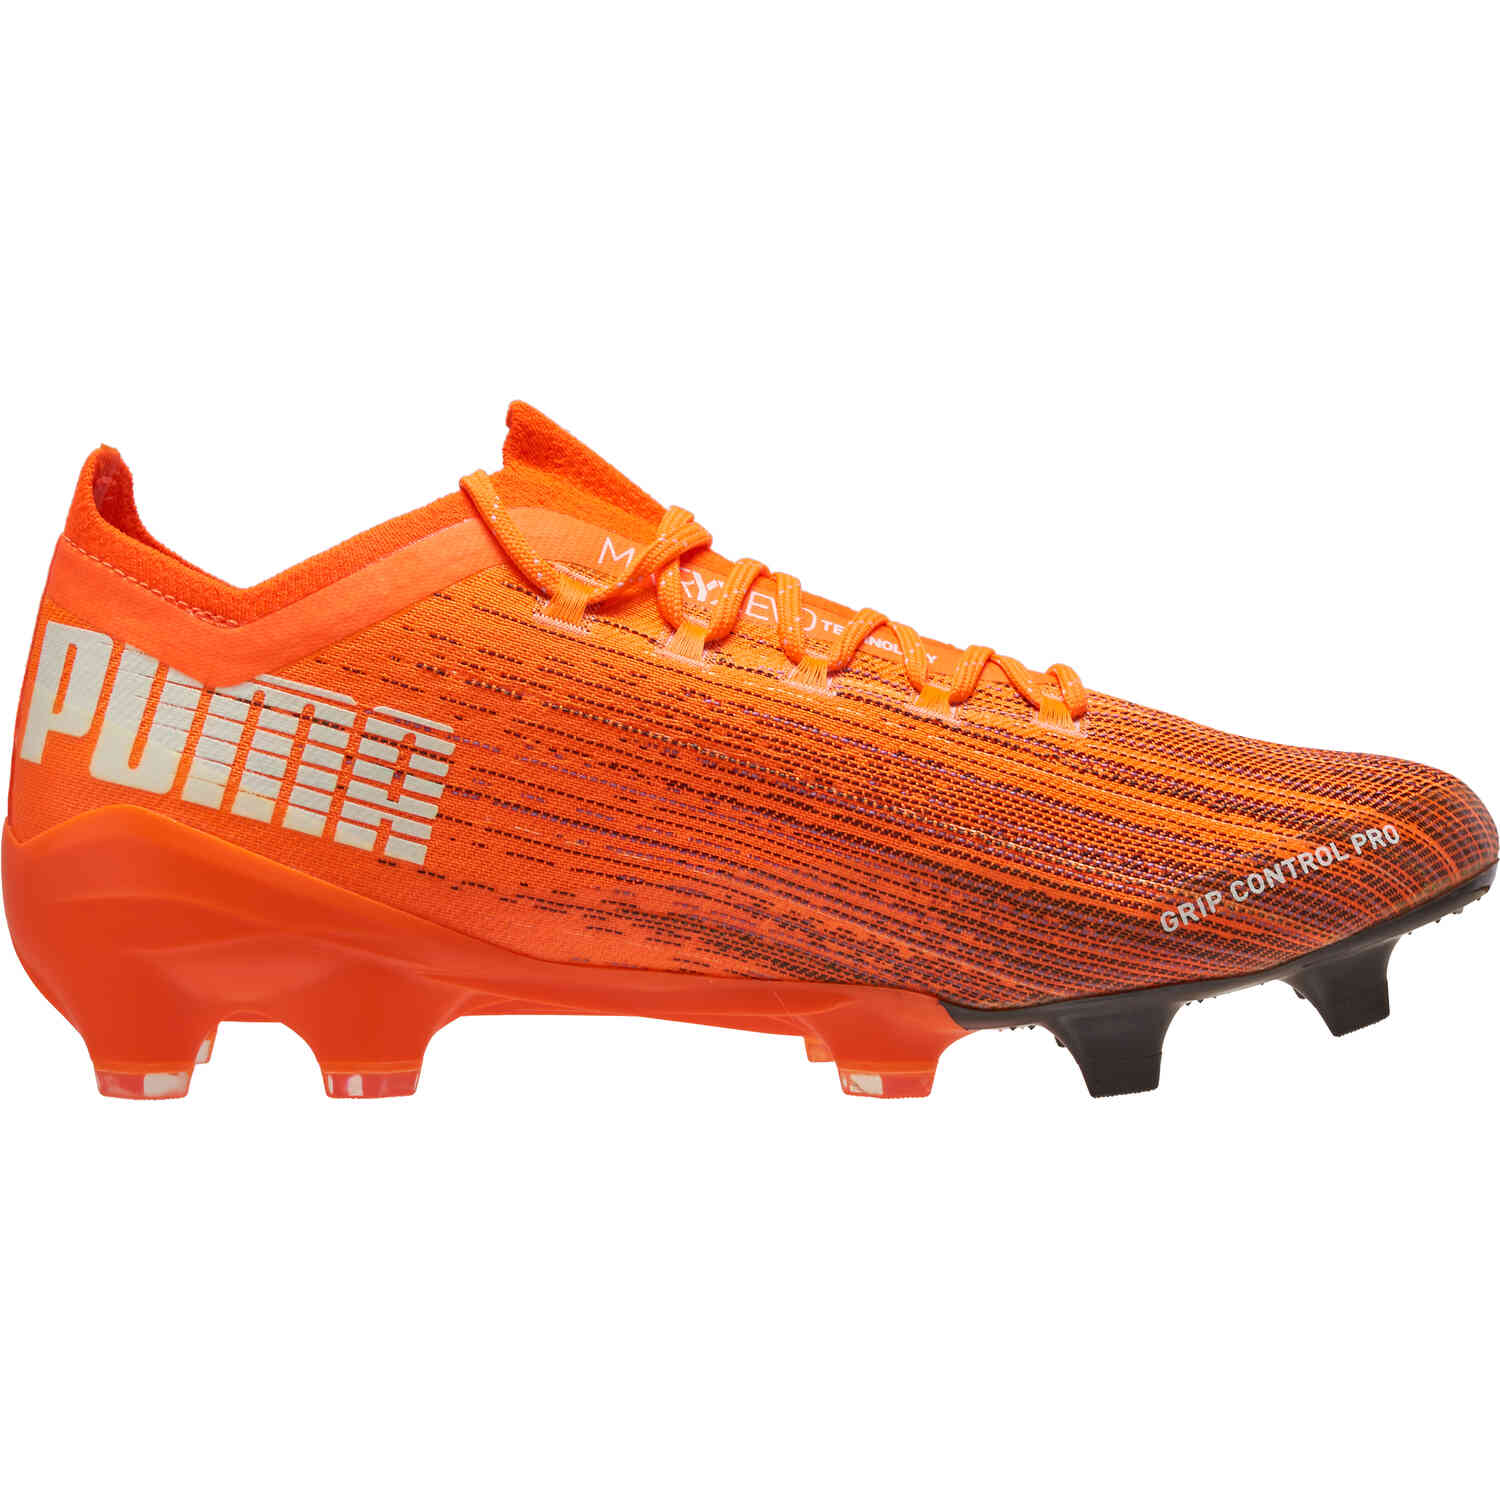 Puma Ultra 1.1 FG - Chasing Adrenaline - SoccerPro